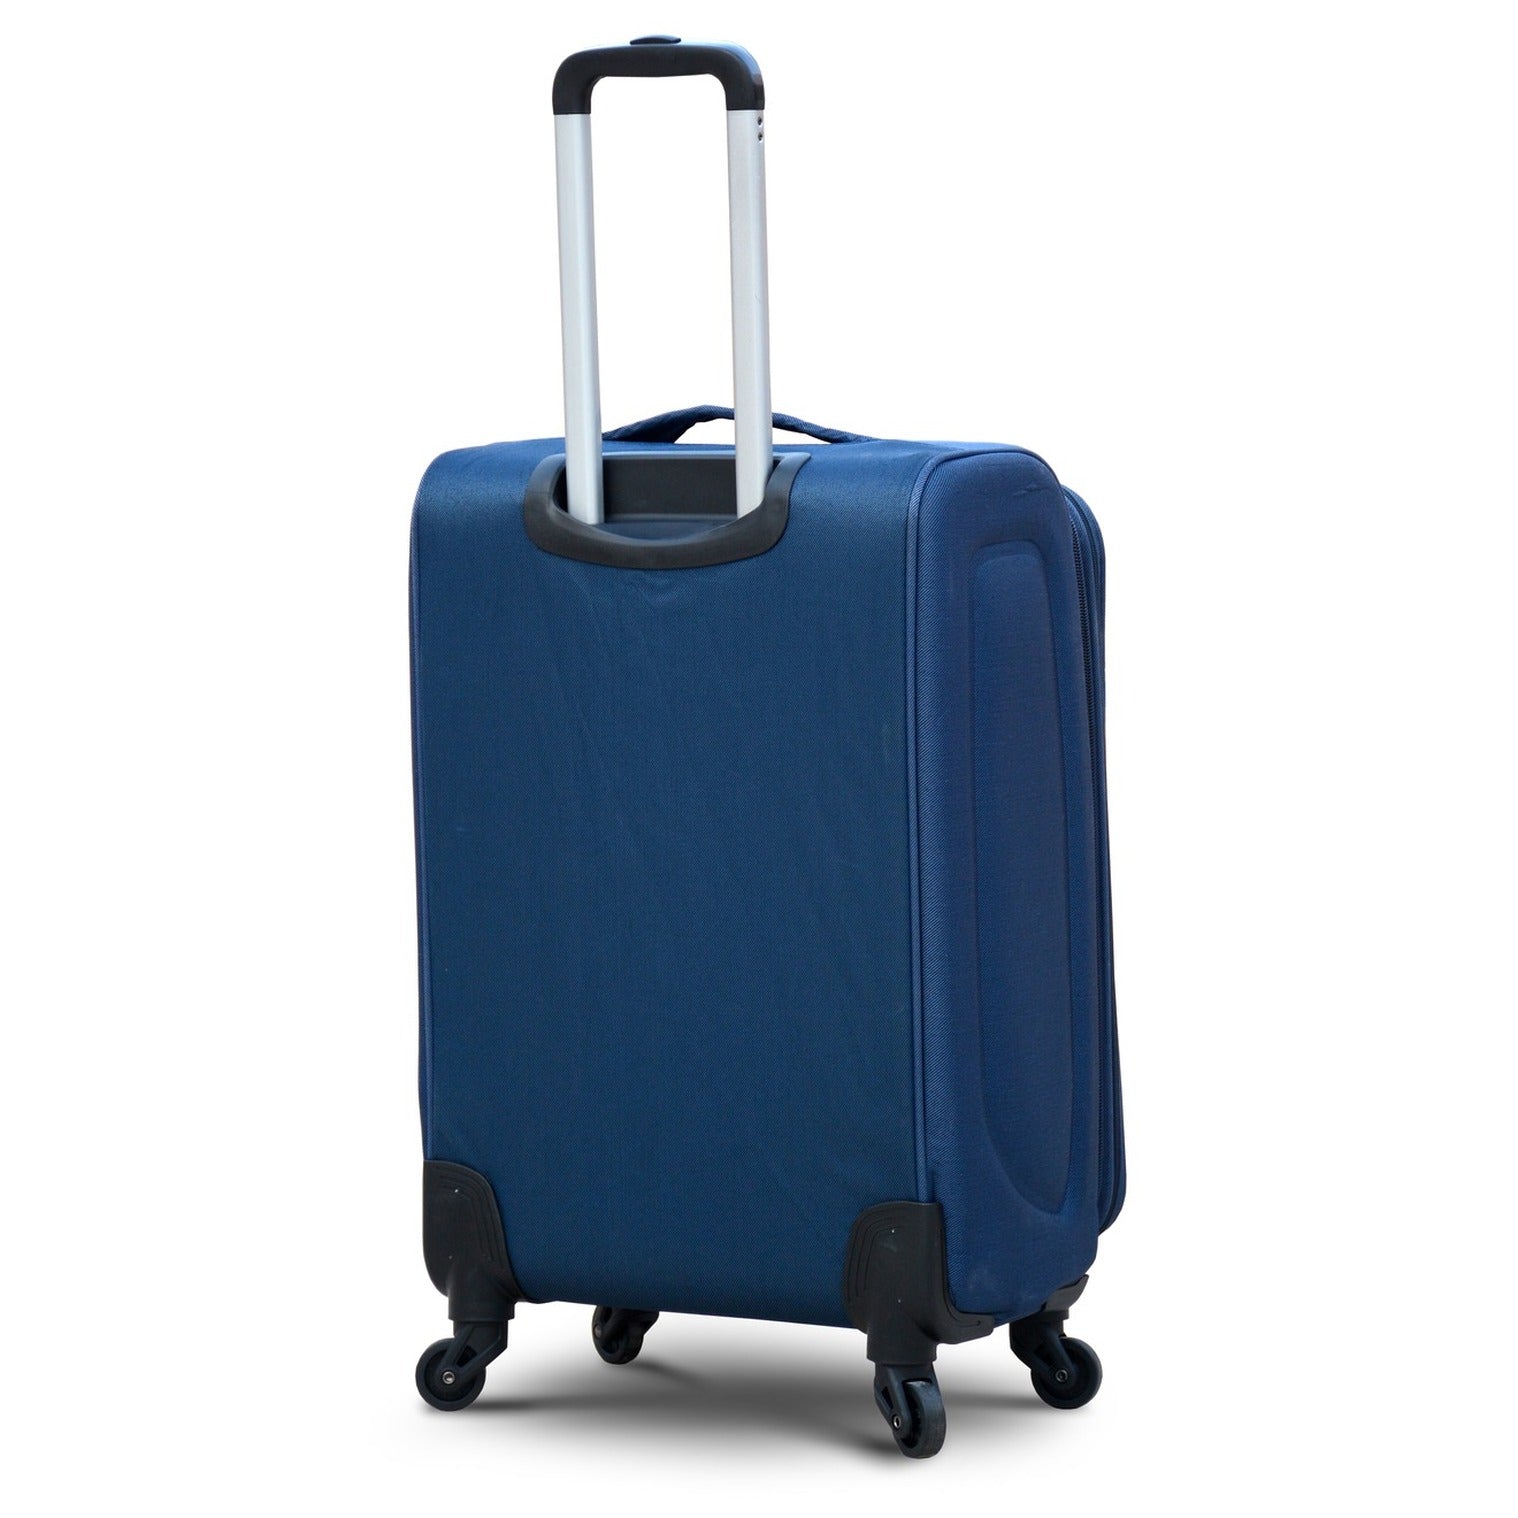 20" Blue Colour SJ JIAN 4 Wheel Luggage Lightweight Soft Material Carry On Trolley Bag Zaappy.com